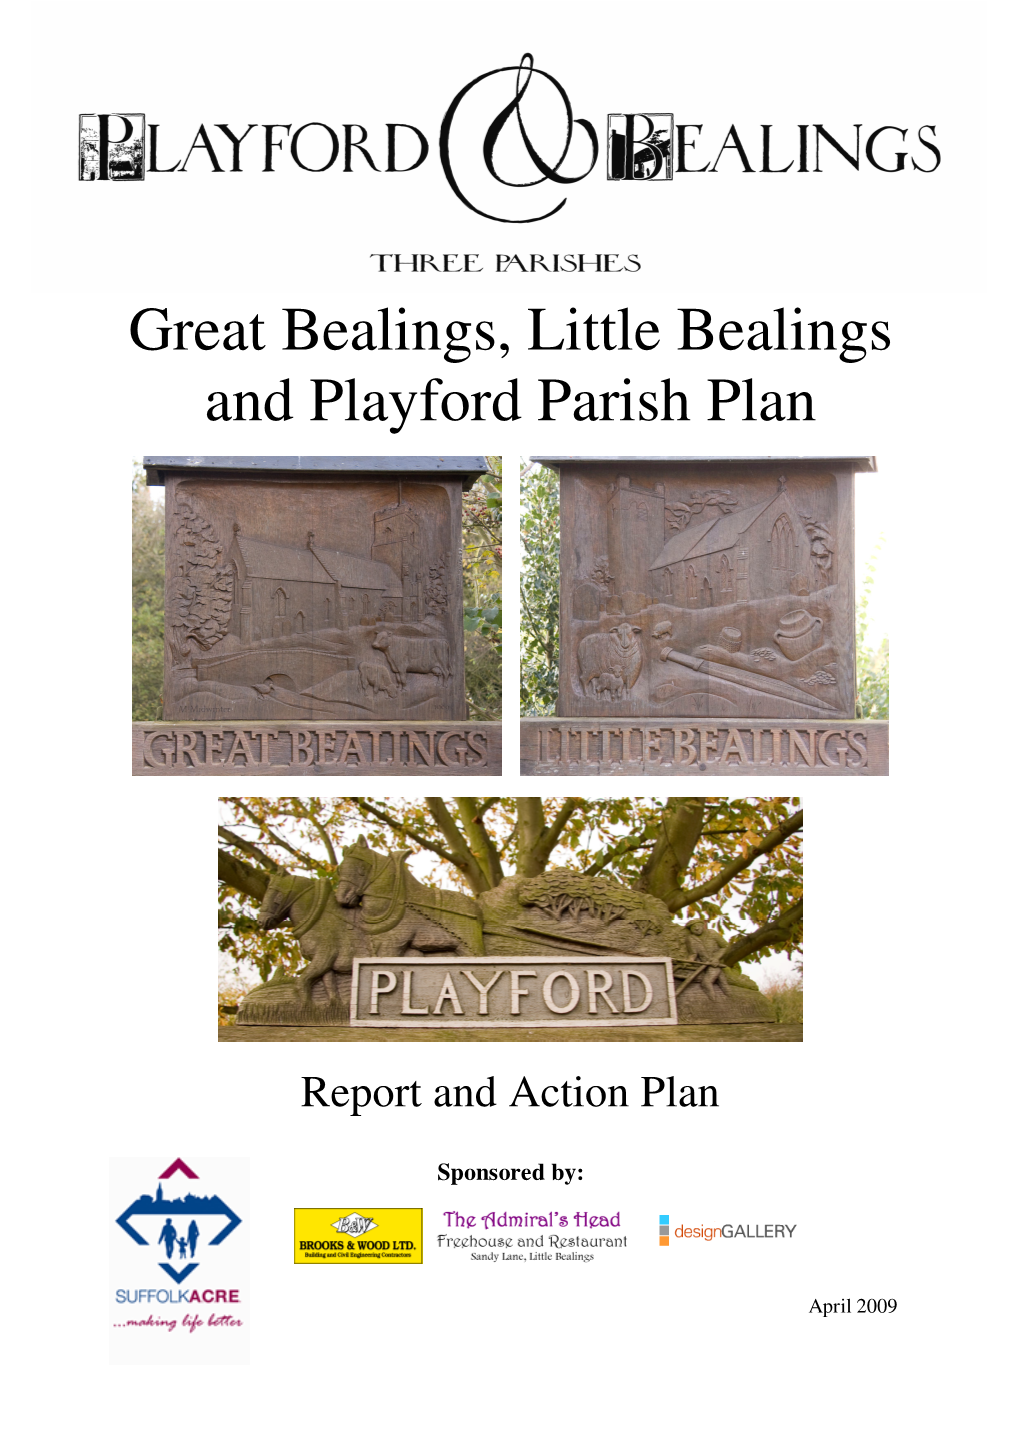 Great Bealings, Little Bealings and Playford Parish Plan